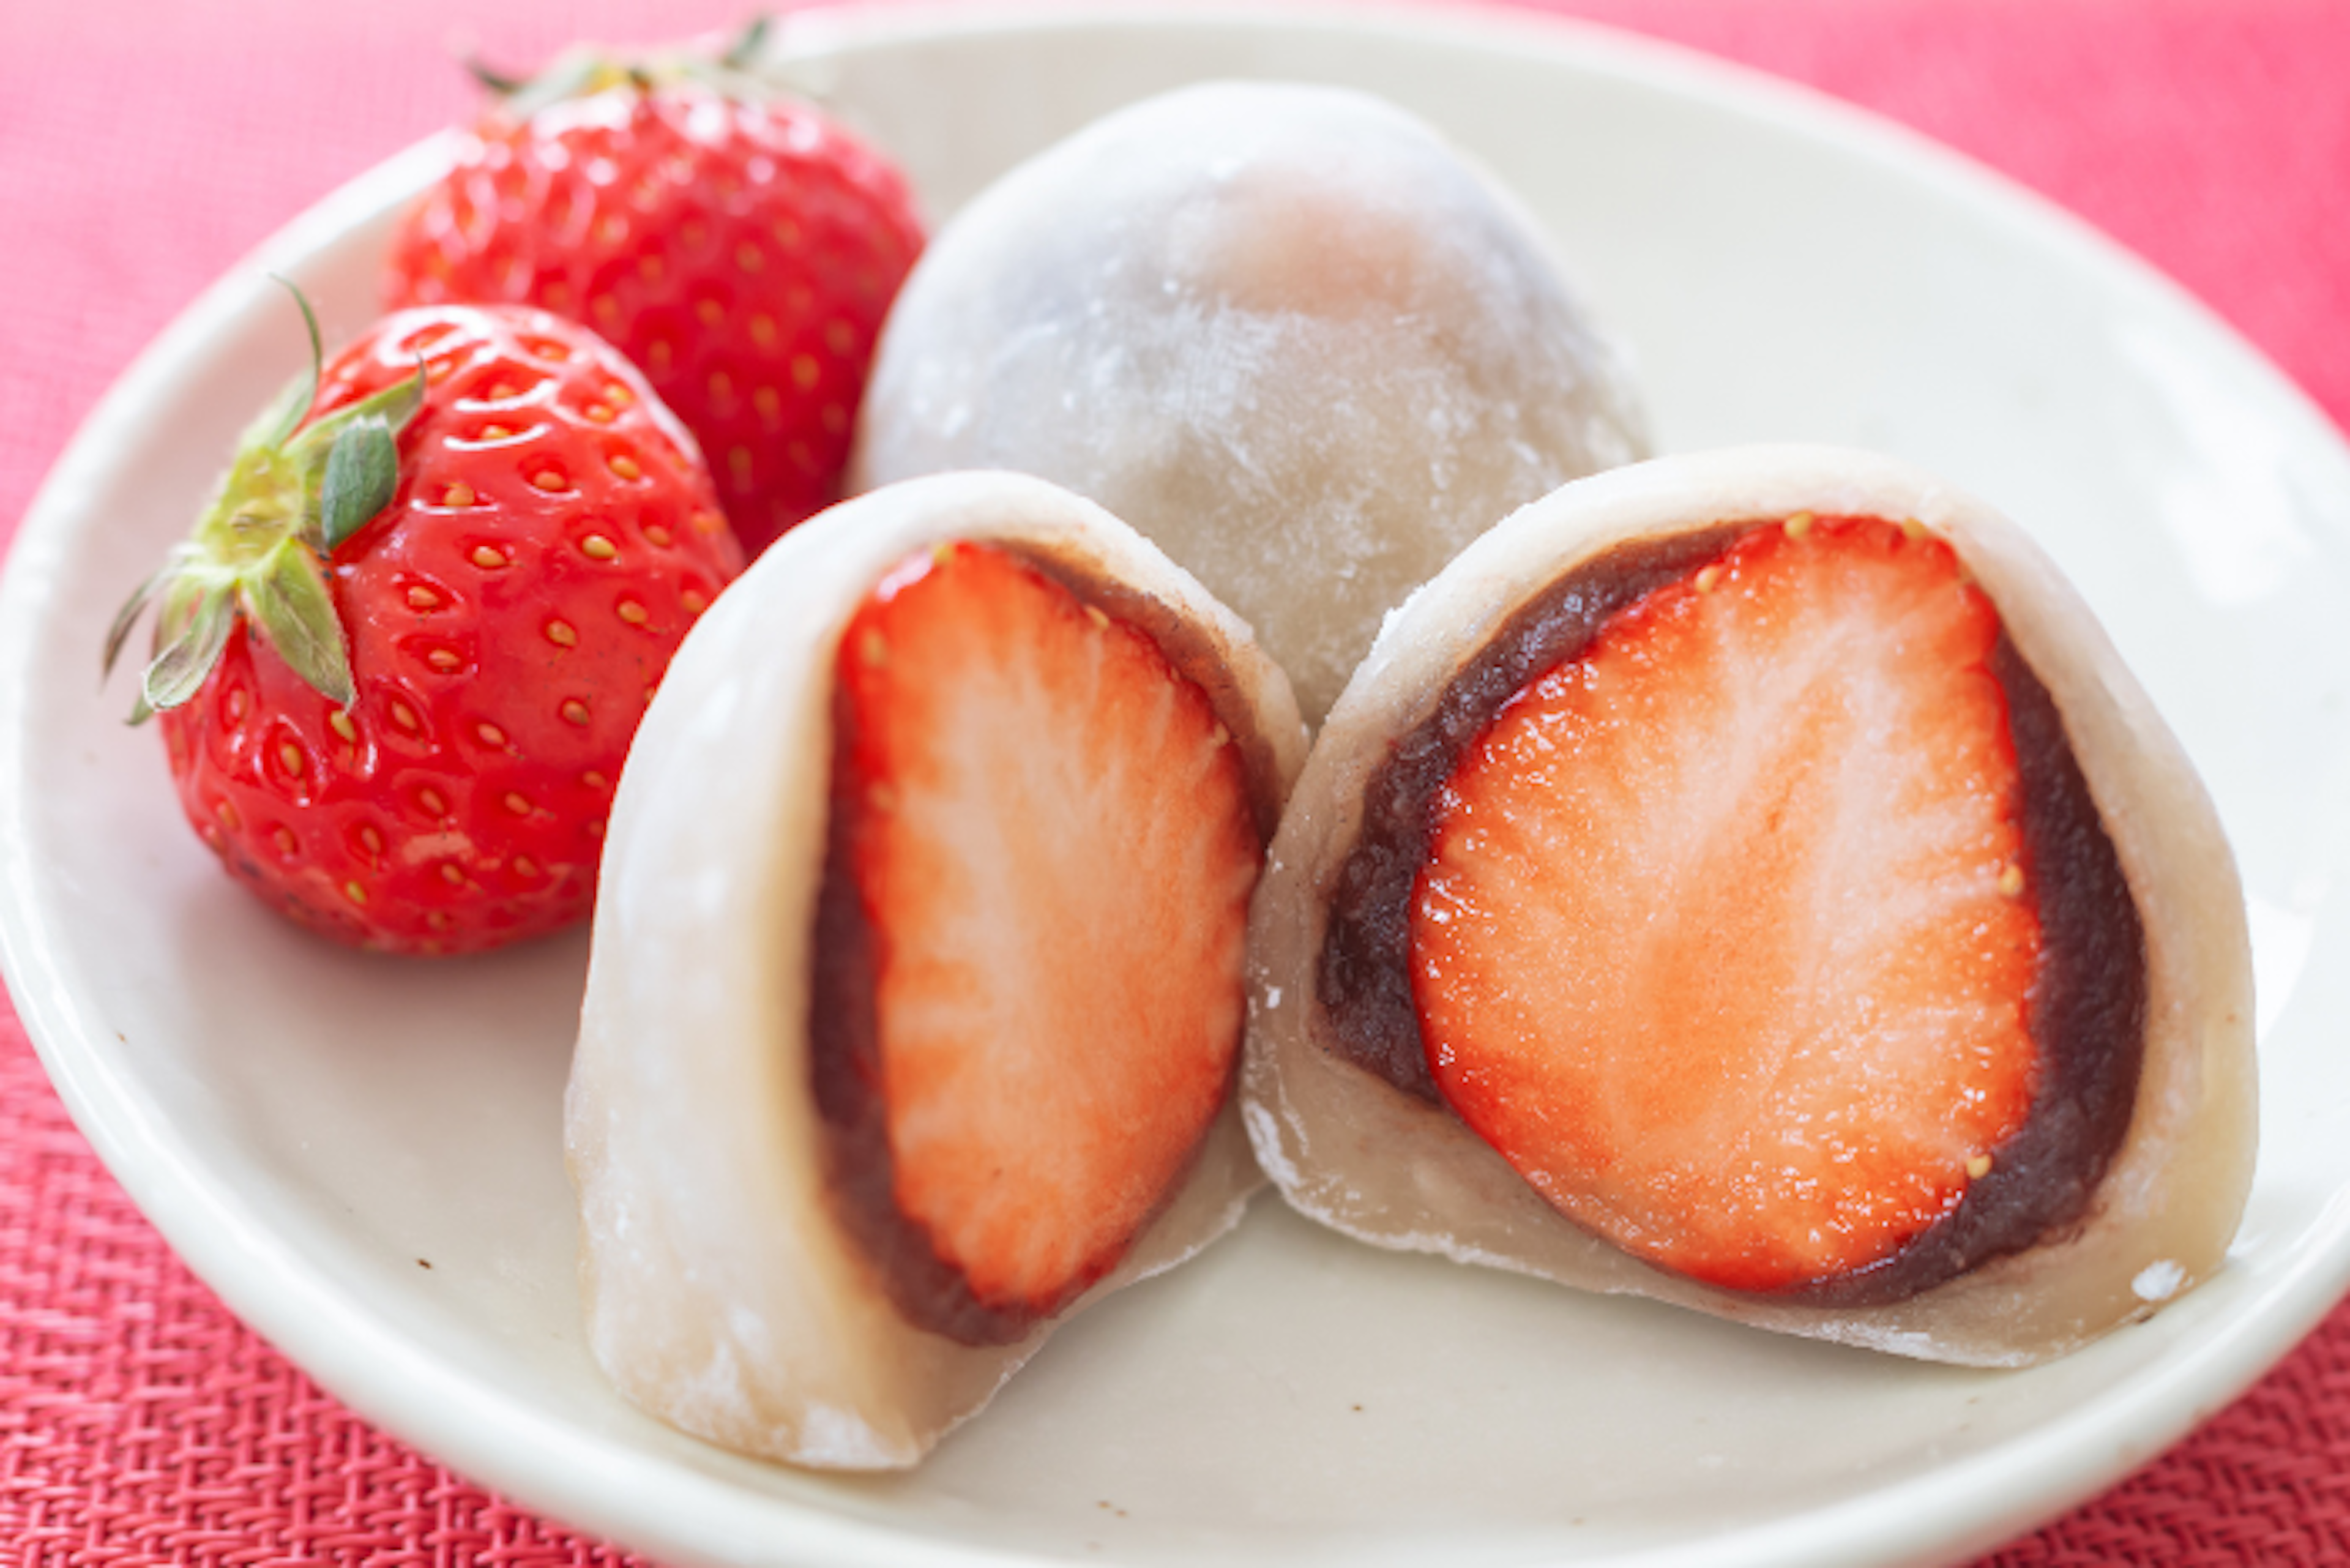 Süße Erdbeer-Mochi (いちご餅): Signaturdessert aus Japan